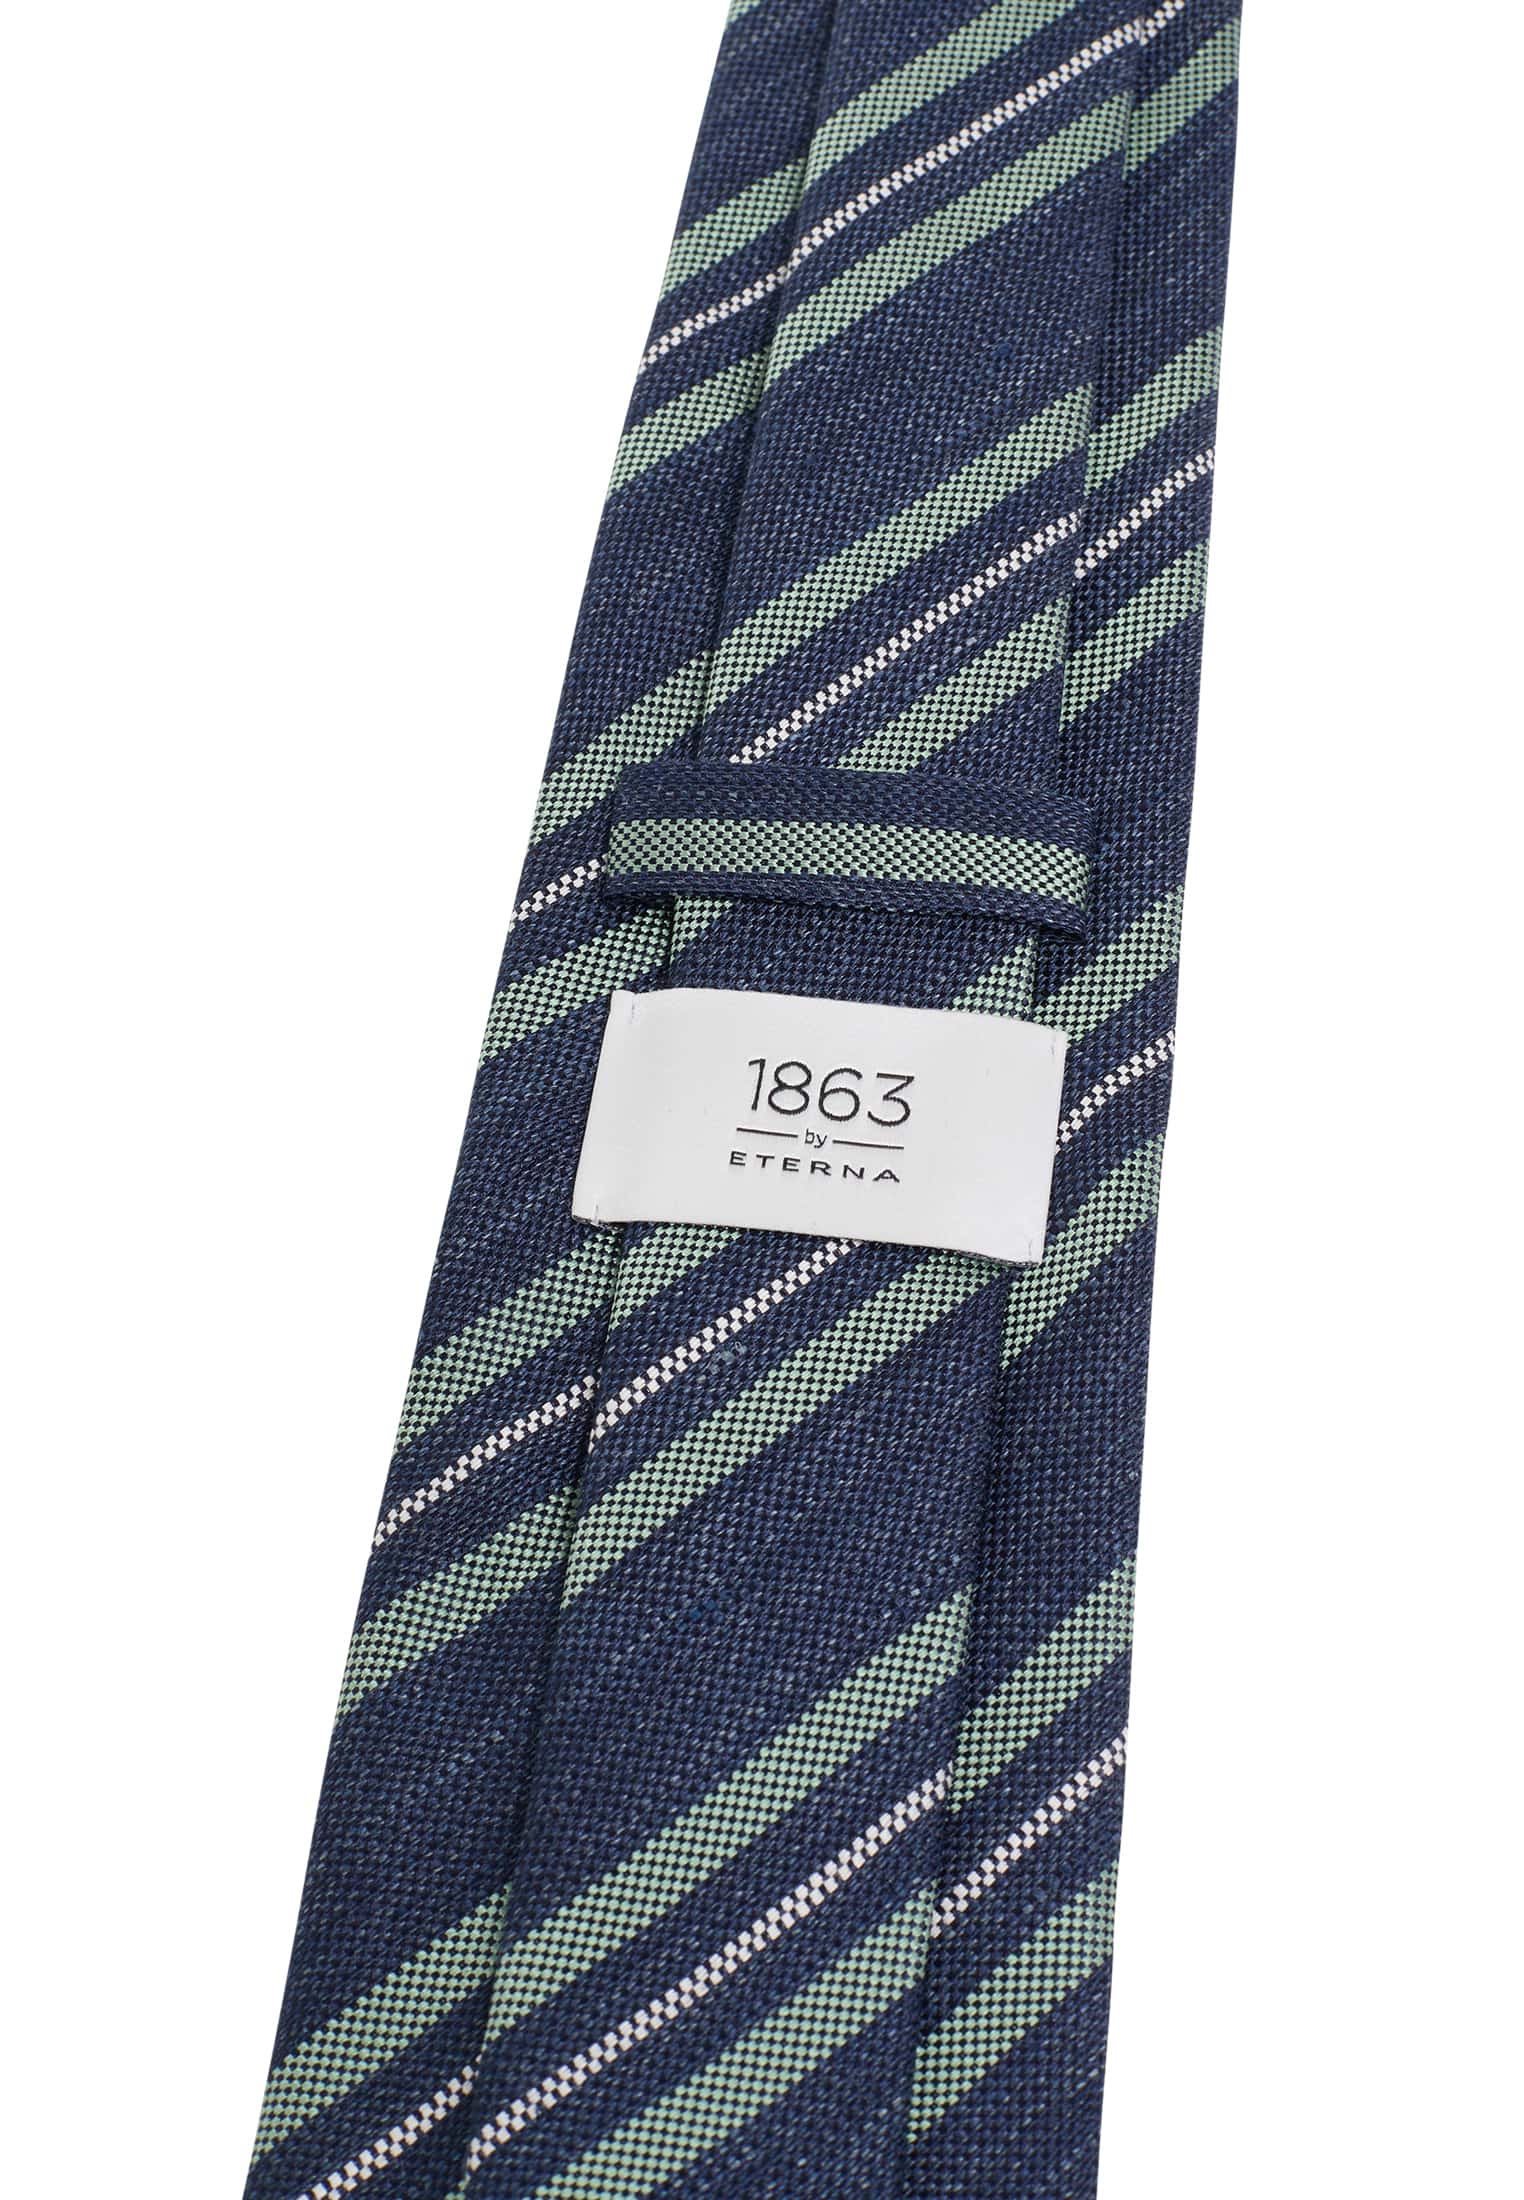 Cravate bleu marine/vert estampé